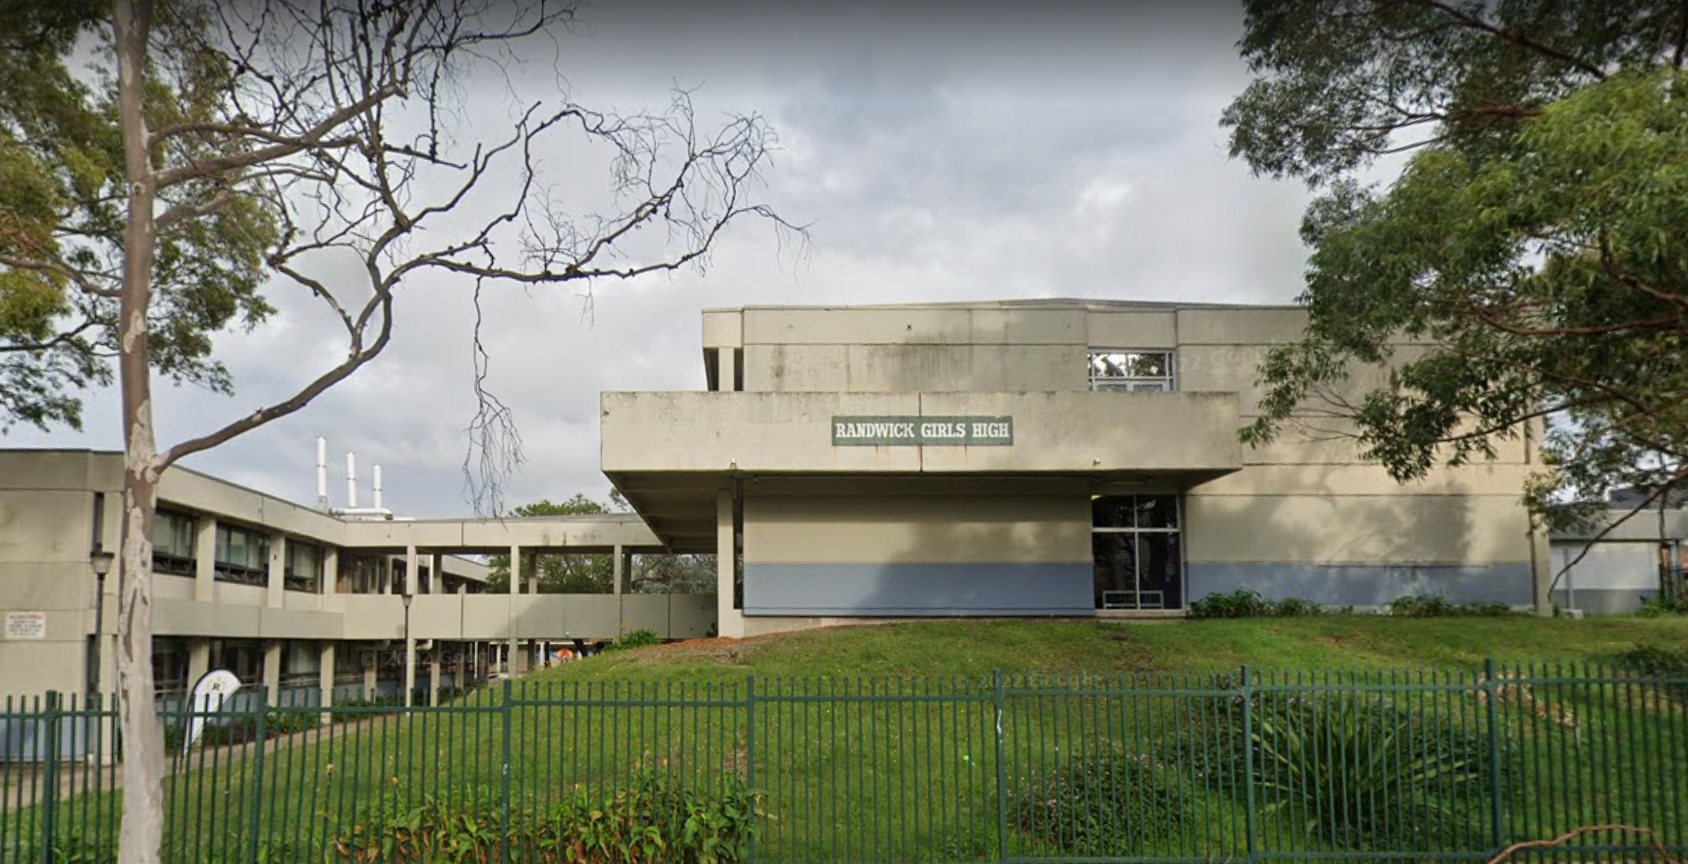 NSW Government reconsiders merging Randwick Girls and Boys High School